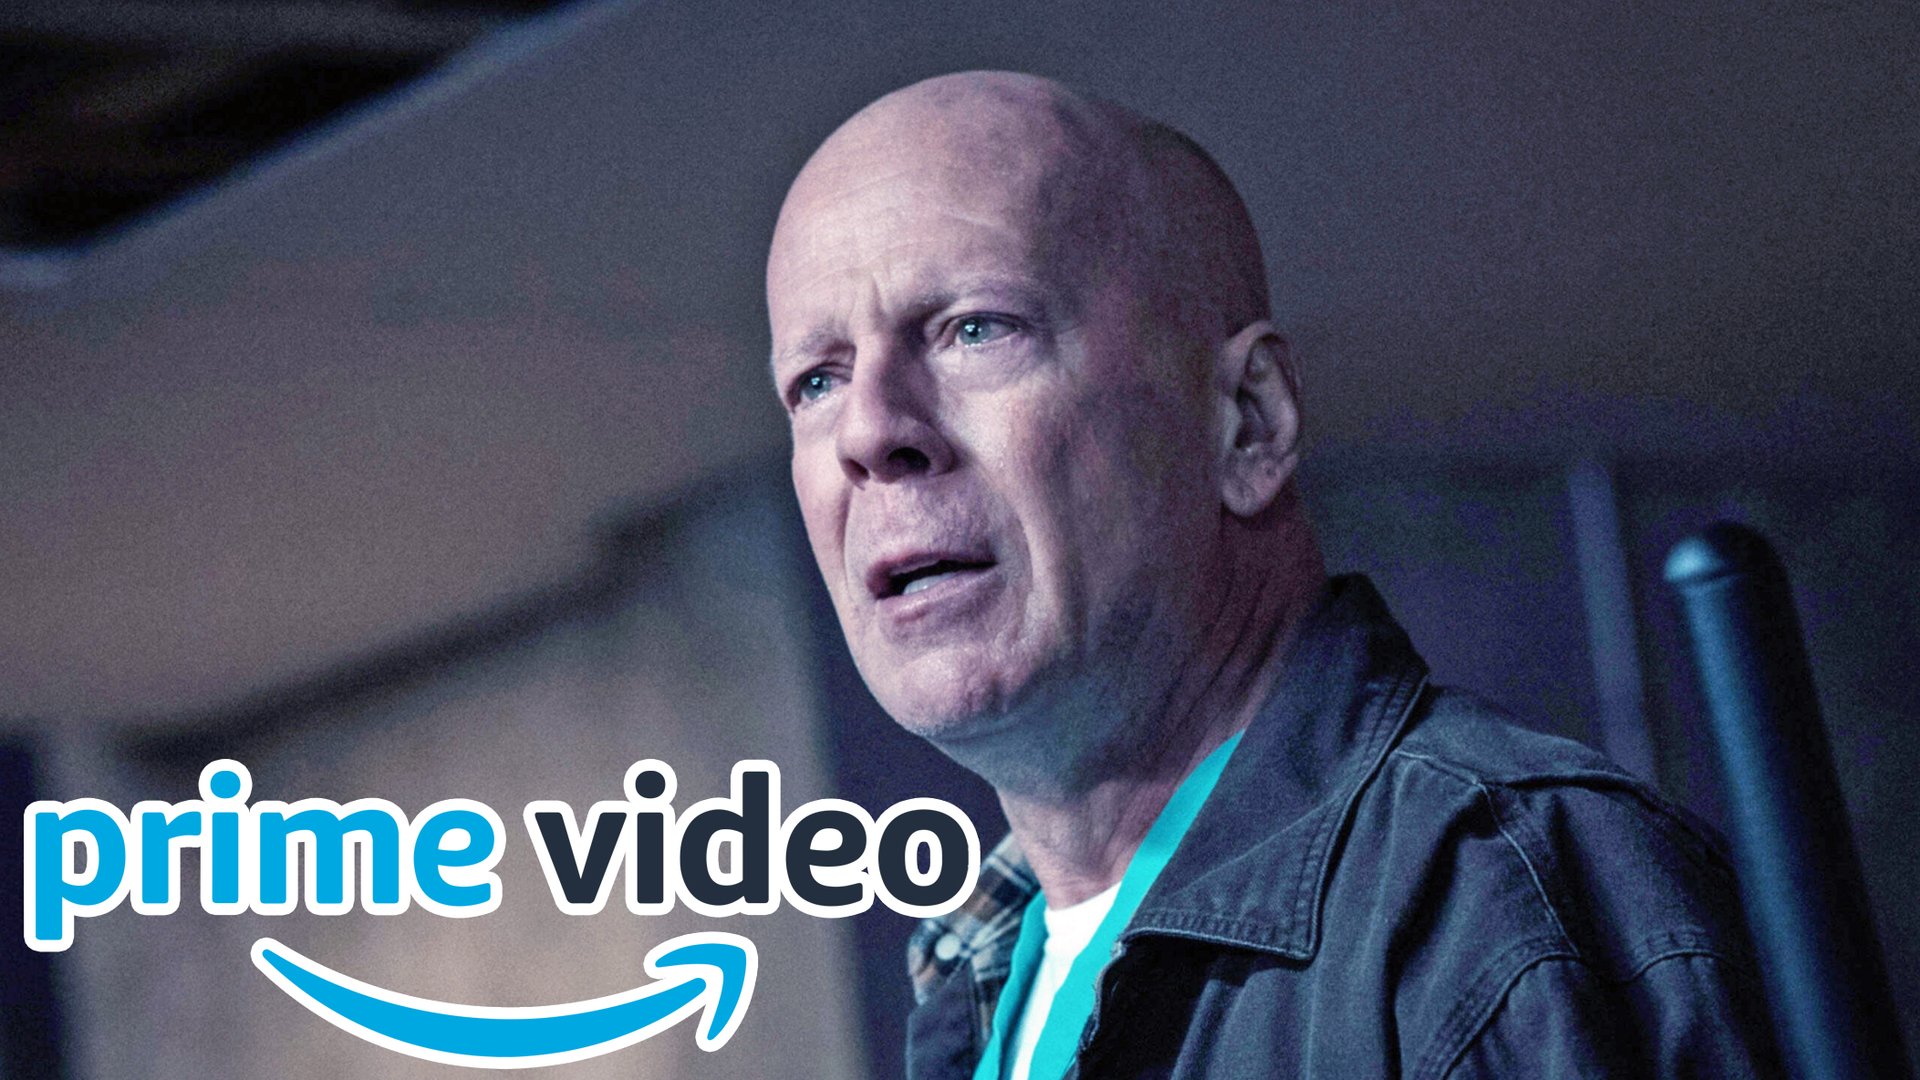 #Actionfilm mit Bruce Willis erobert jetzt die Prime-Video-Charts